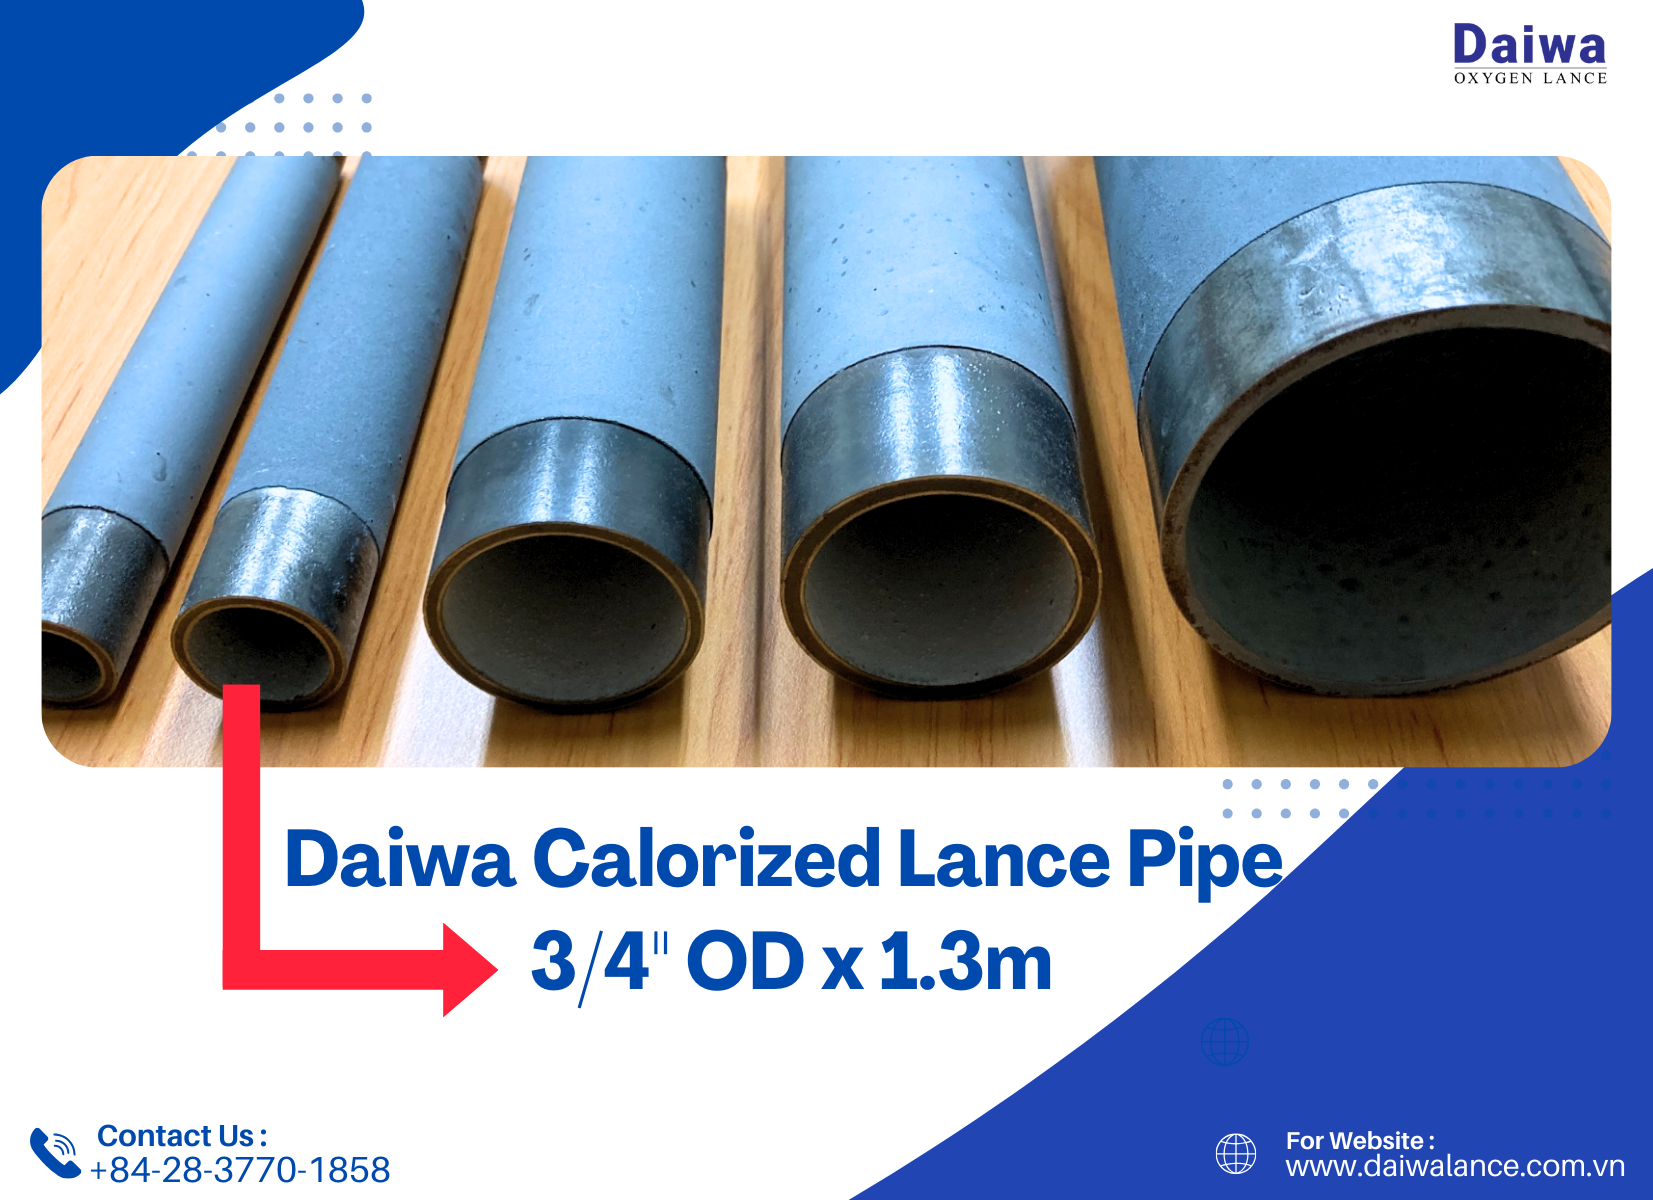 Daiwa Calorized Lance Pipes - 34 OD x 1.3m